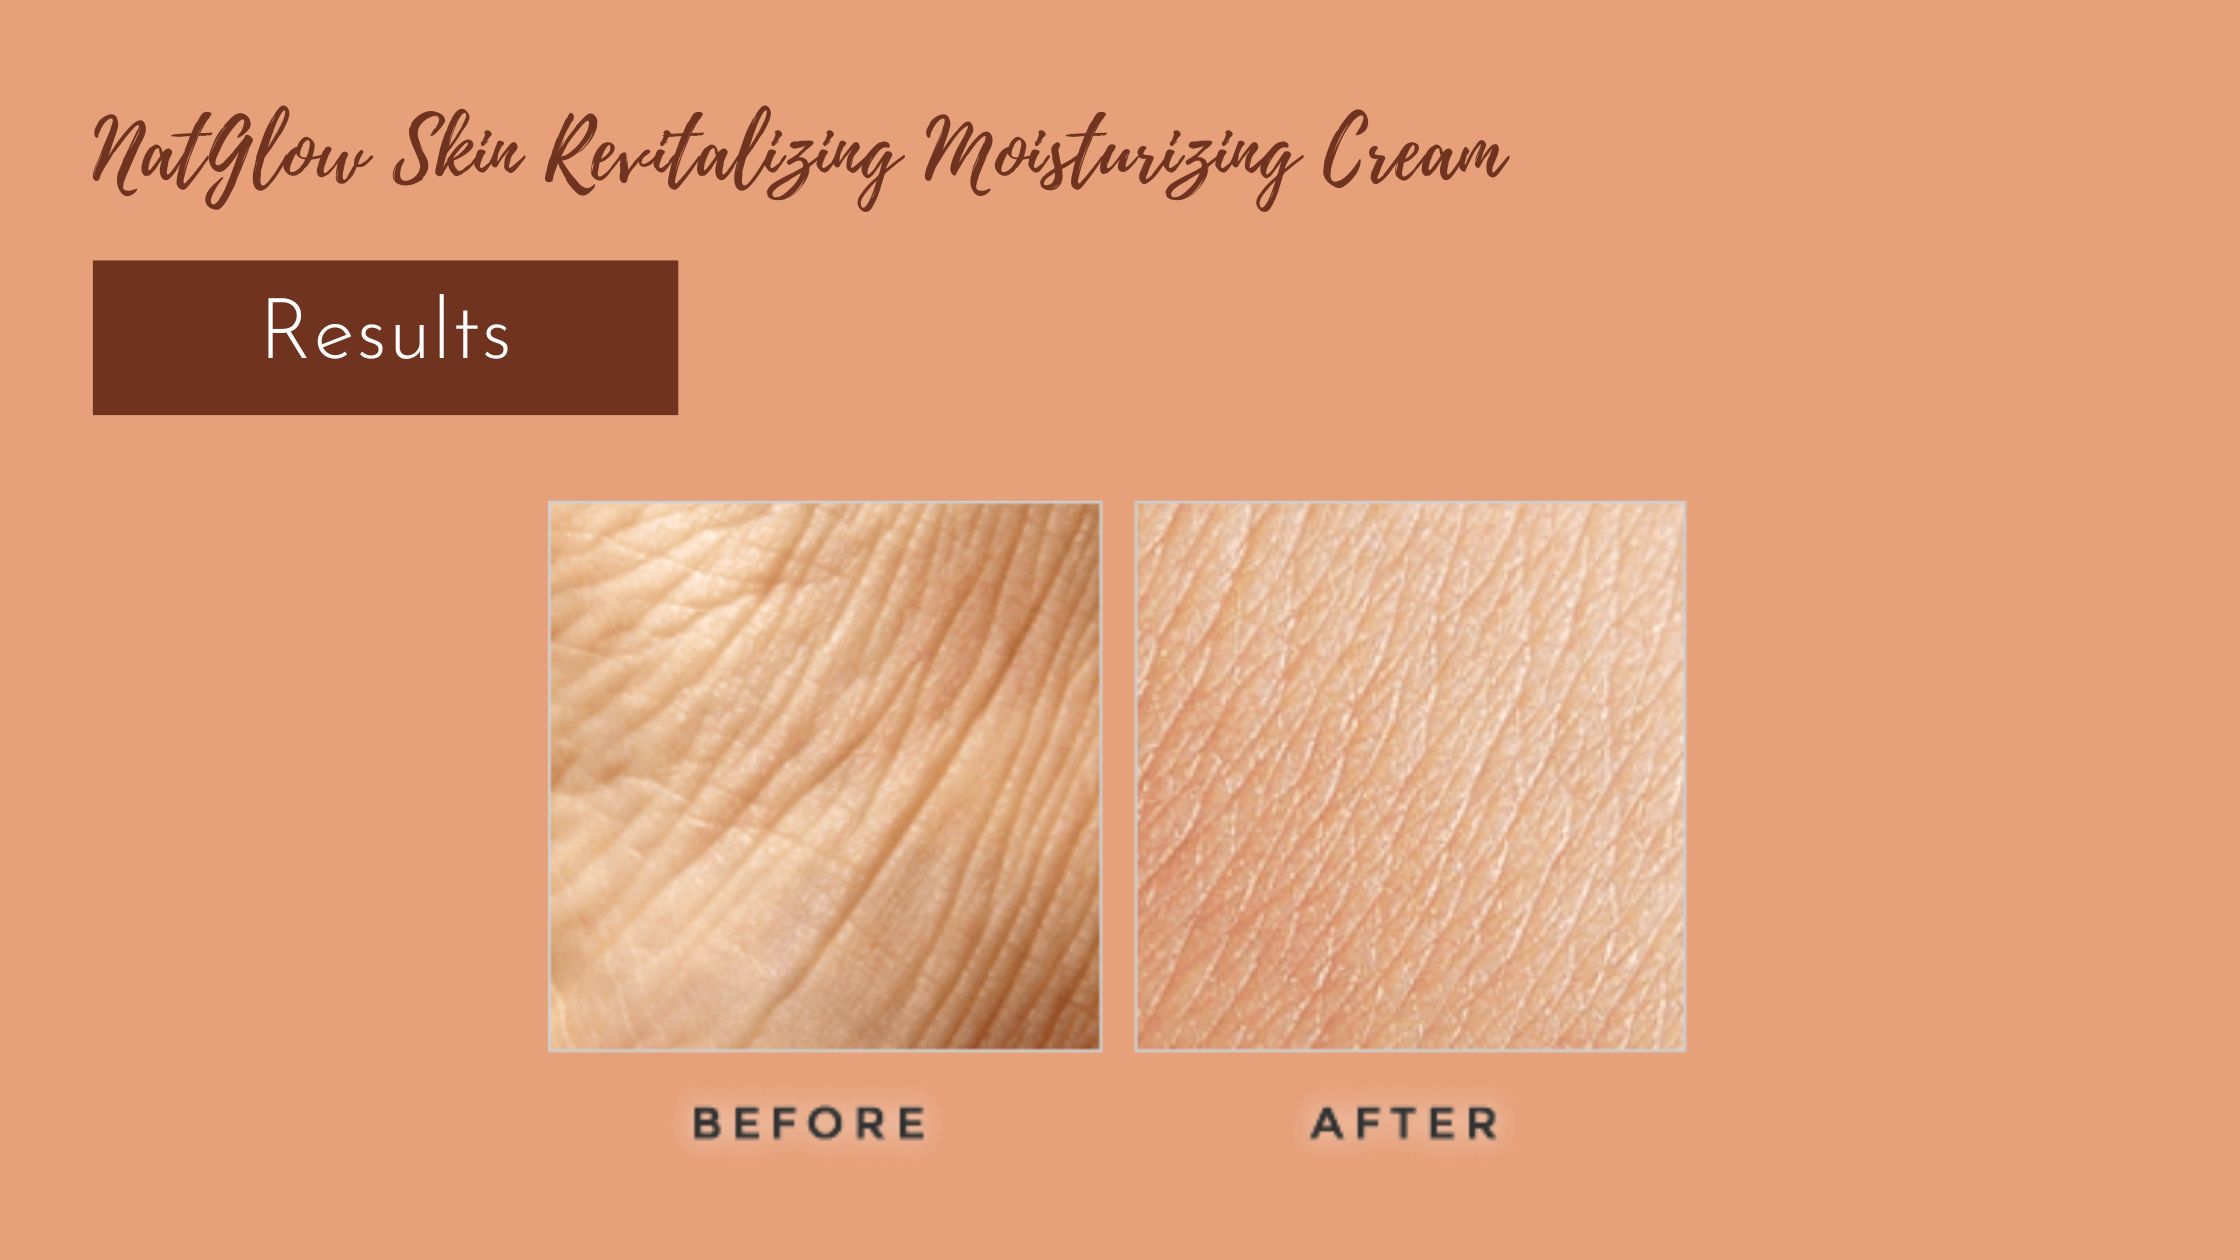 NatGlow Skin Revitalizing Moisturizing Cream Results